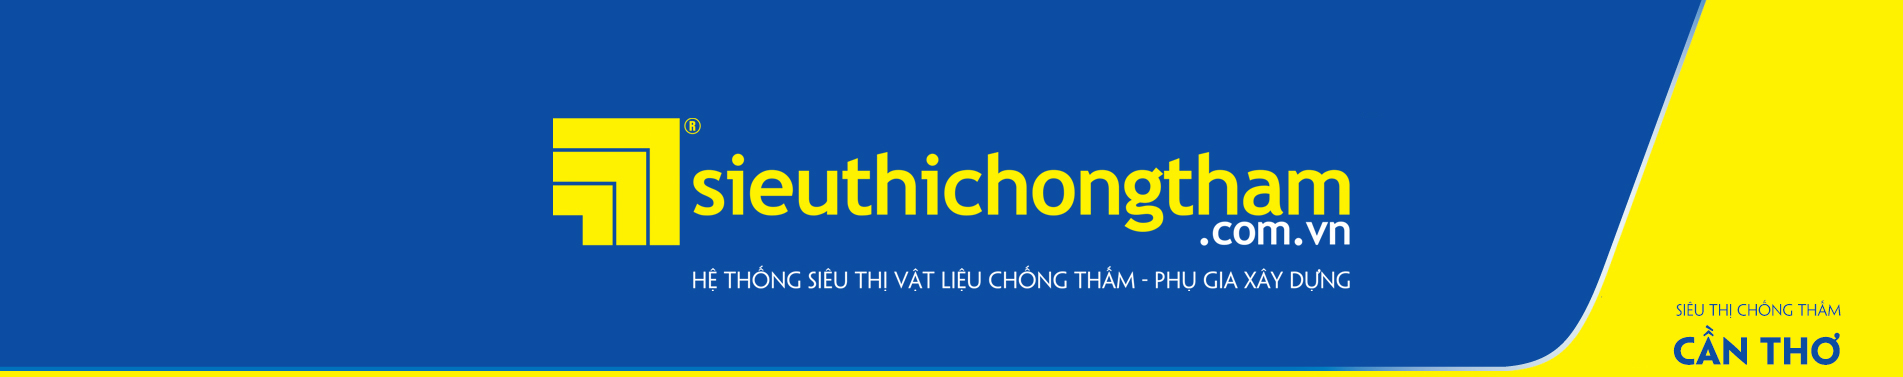 Sieu Thi Chong Tham Can Tho